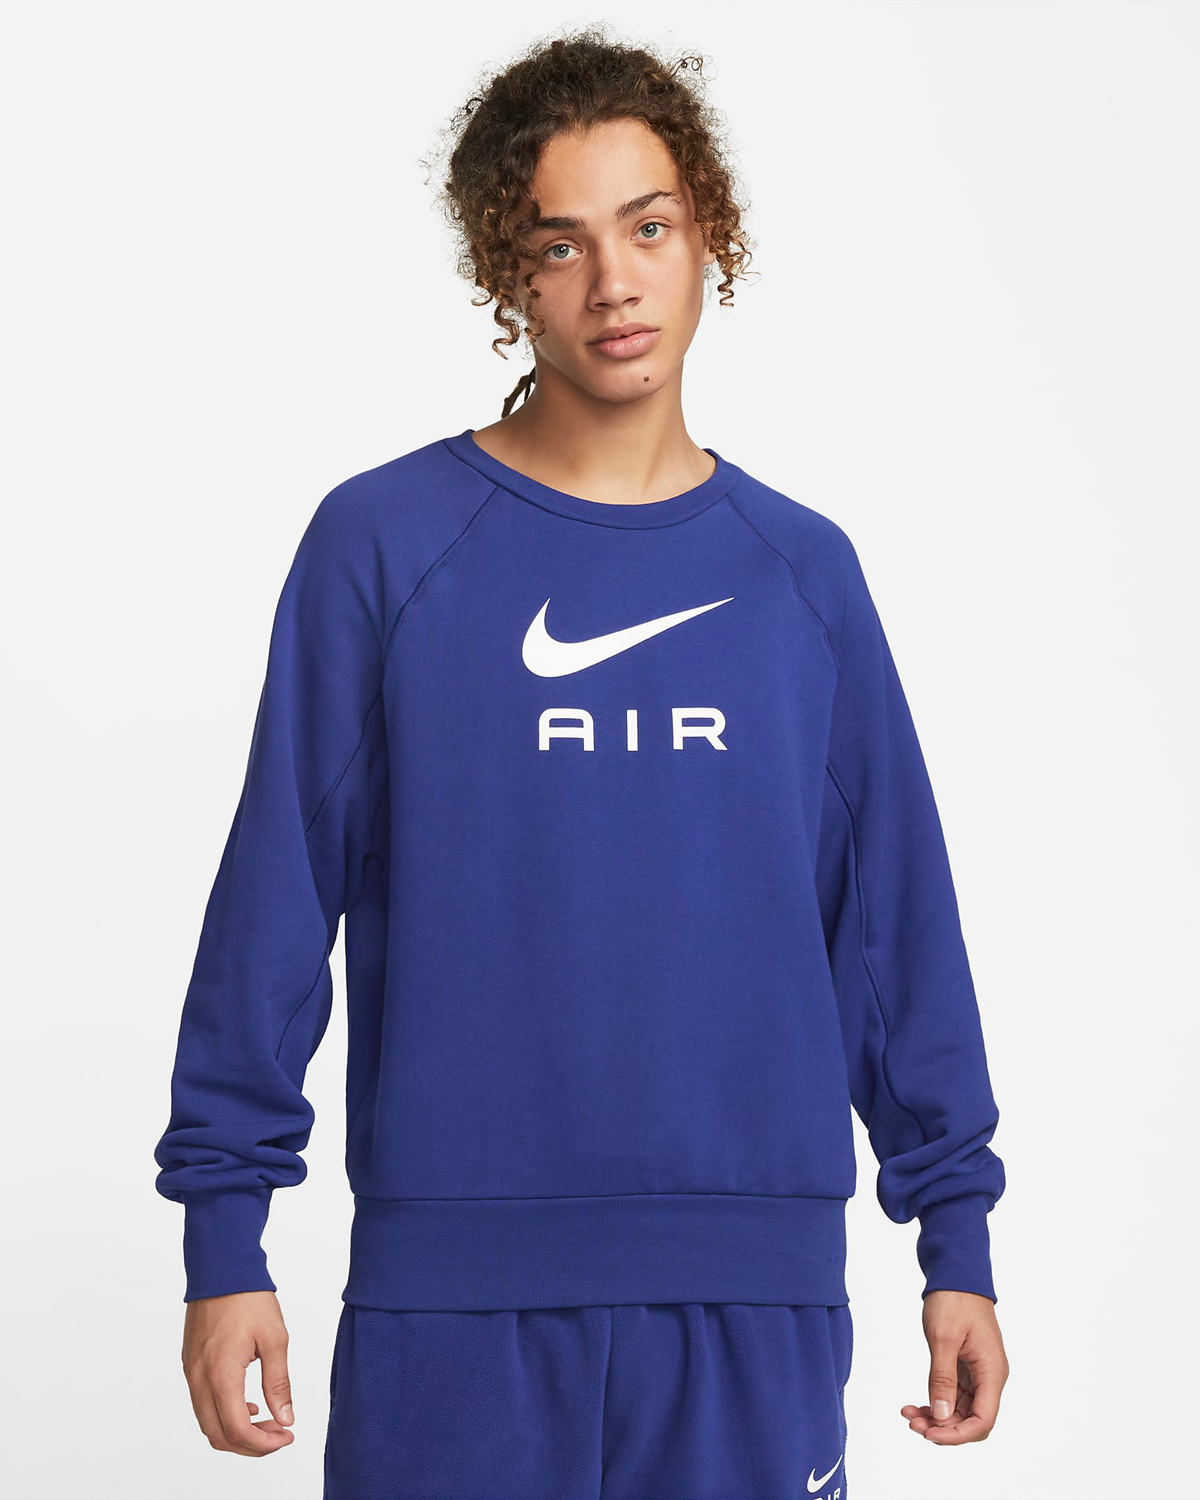 Nike-Air-Crew-Sweatshirt-Deep-Royal-Blue